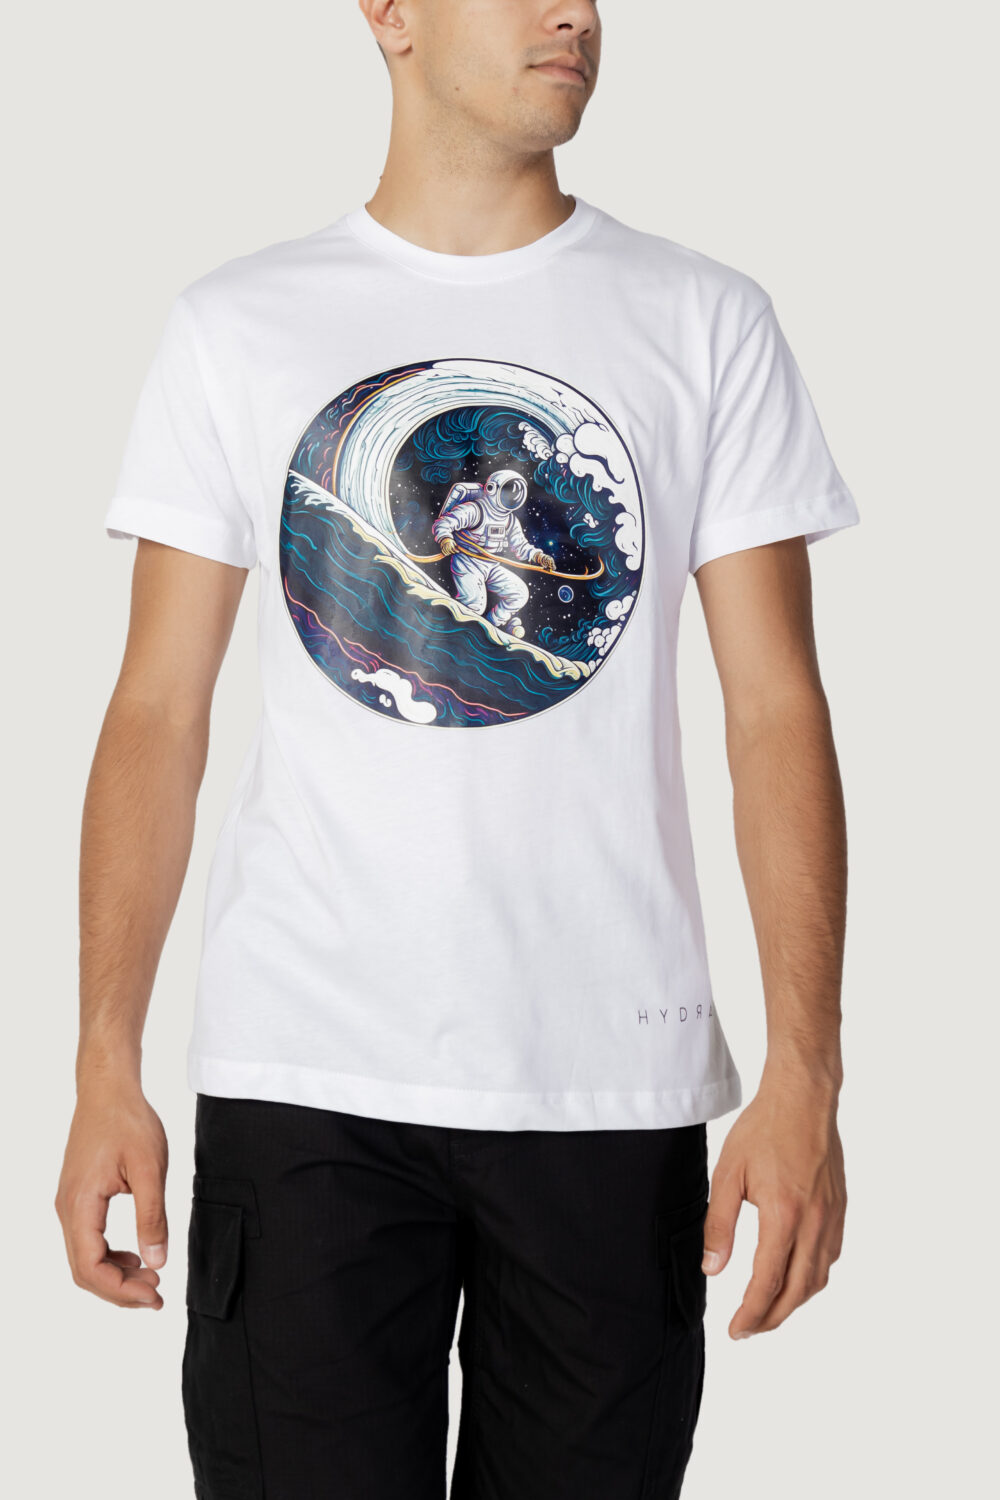 T-shirt Hydra Clothing z. K2 - Foto 1